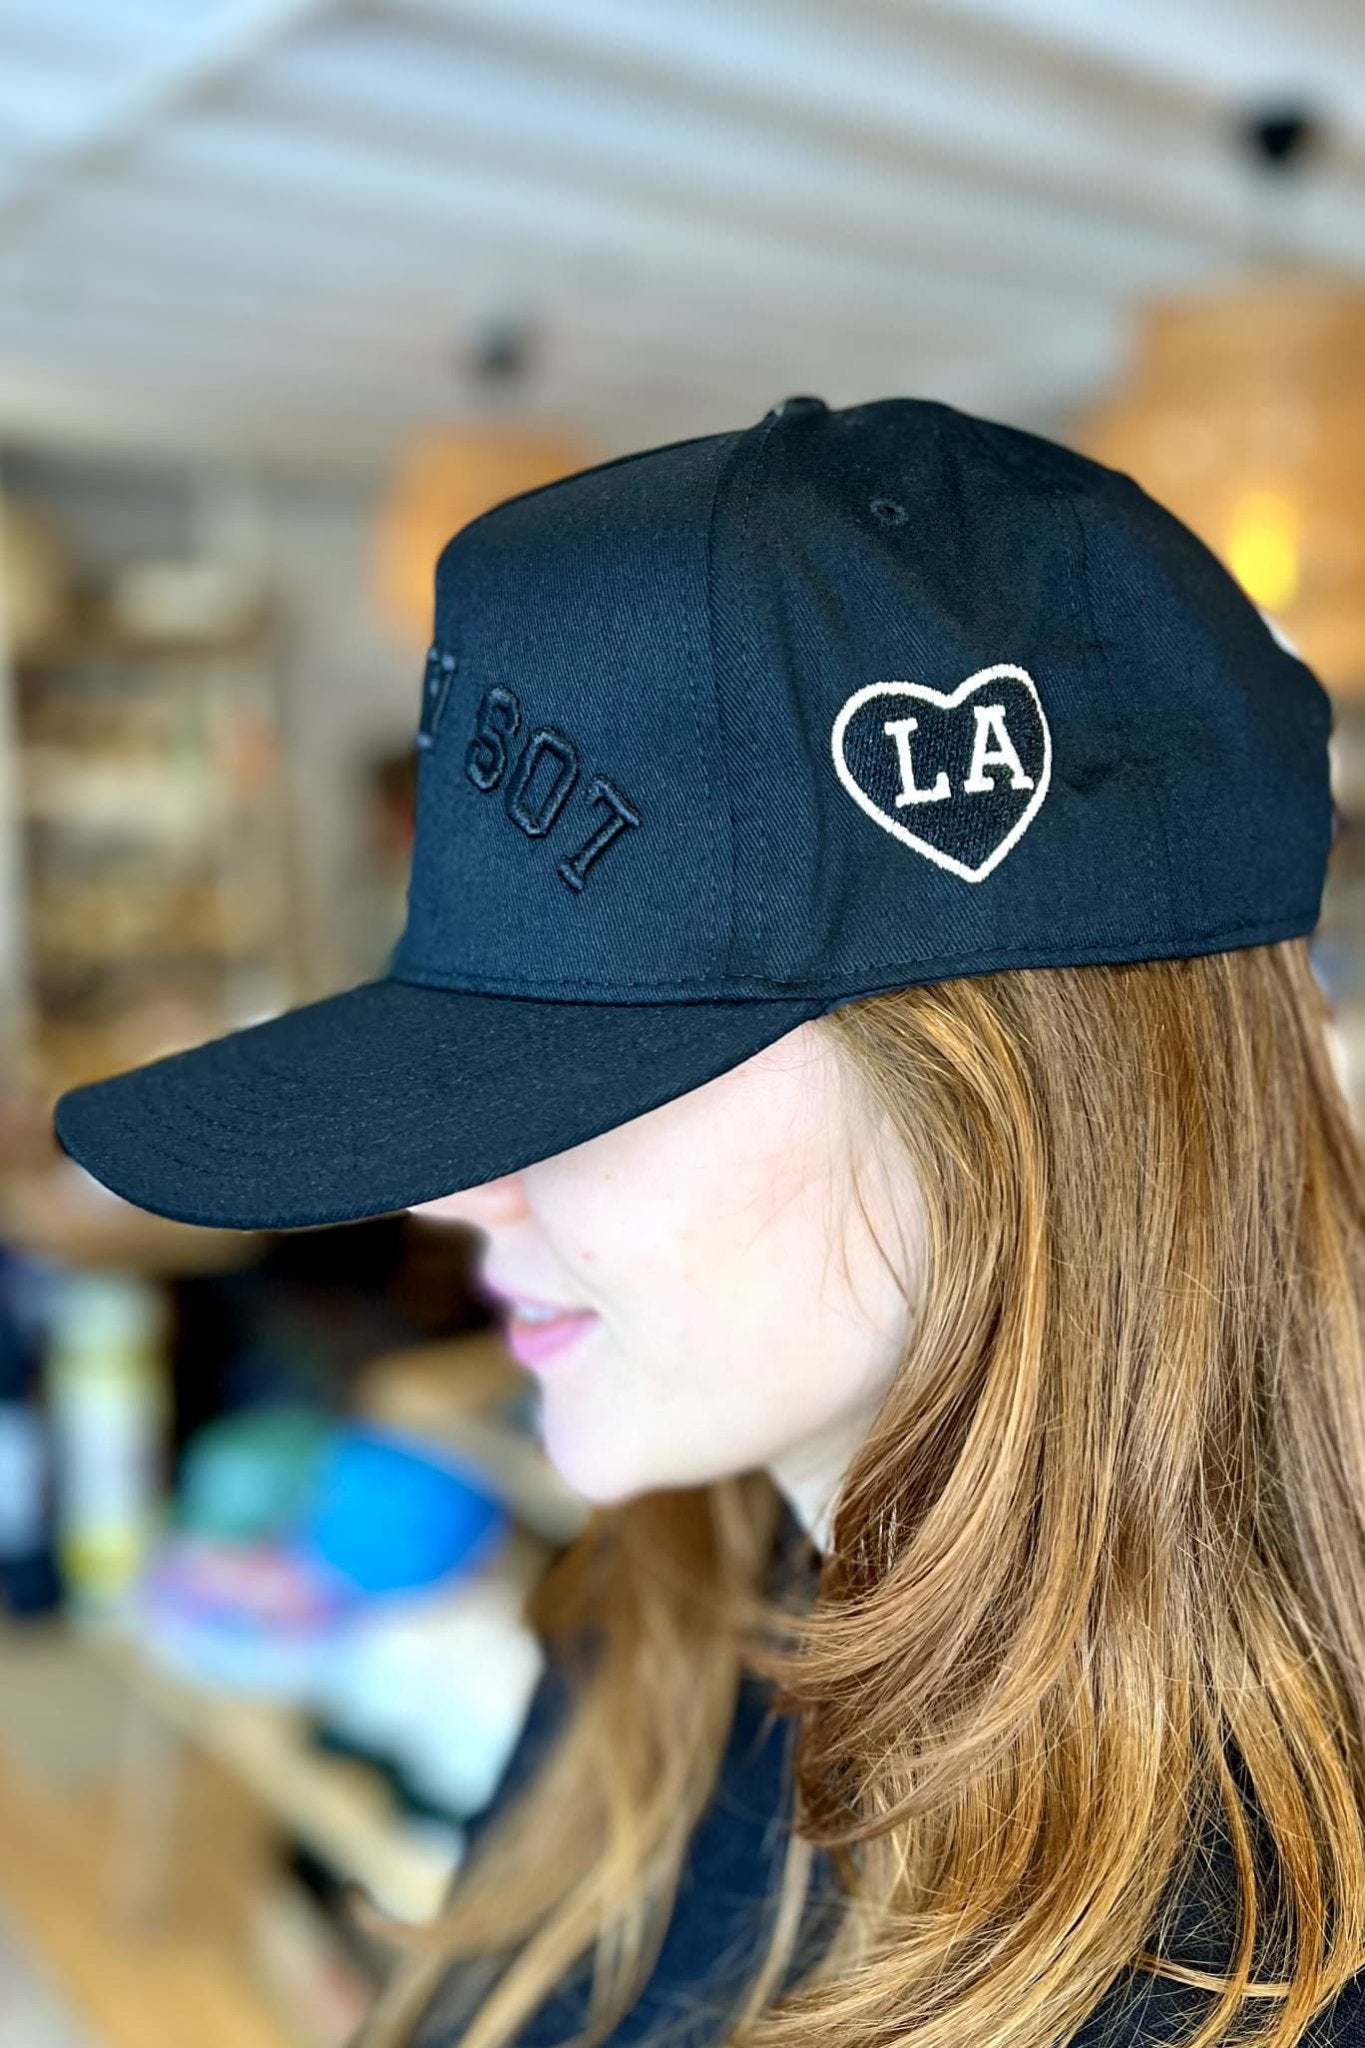 Los Angeles Rebel Baseball Cap (Black) - Hat